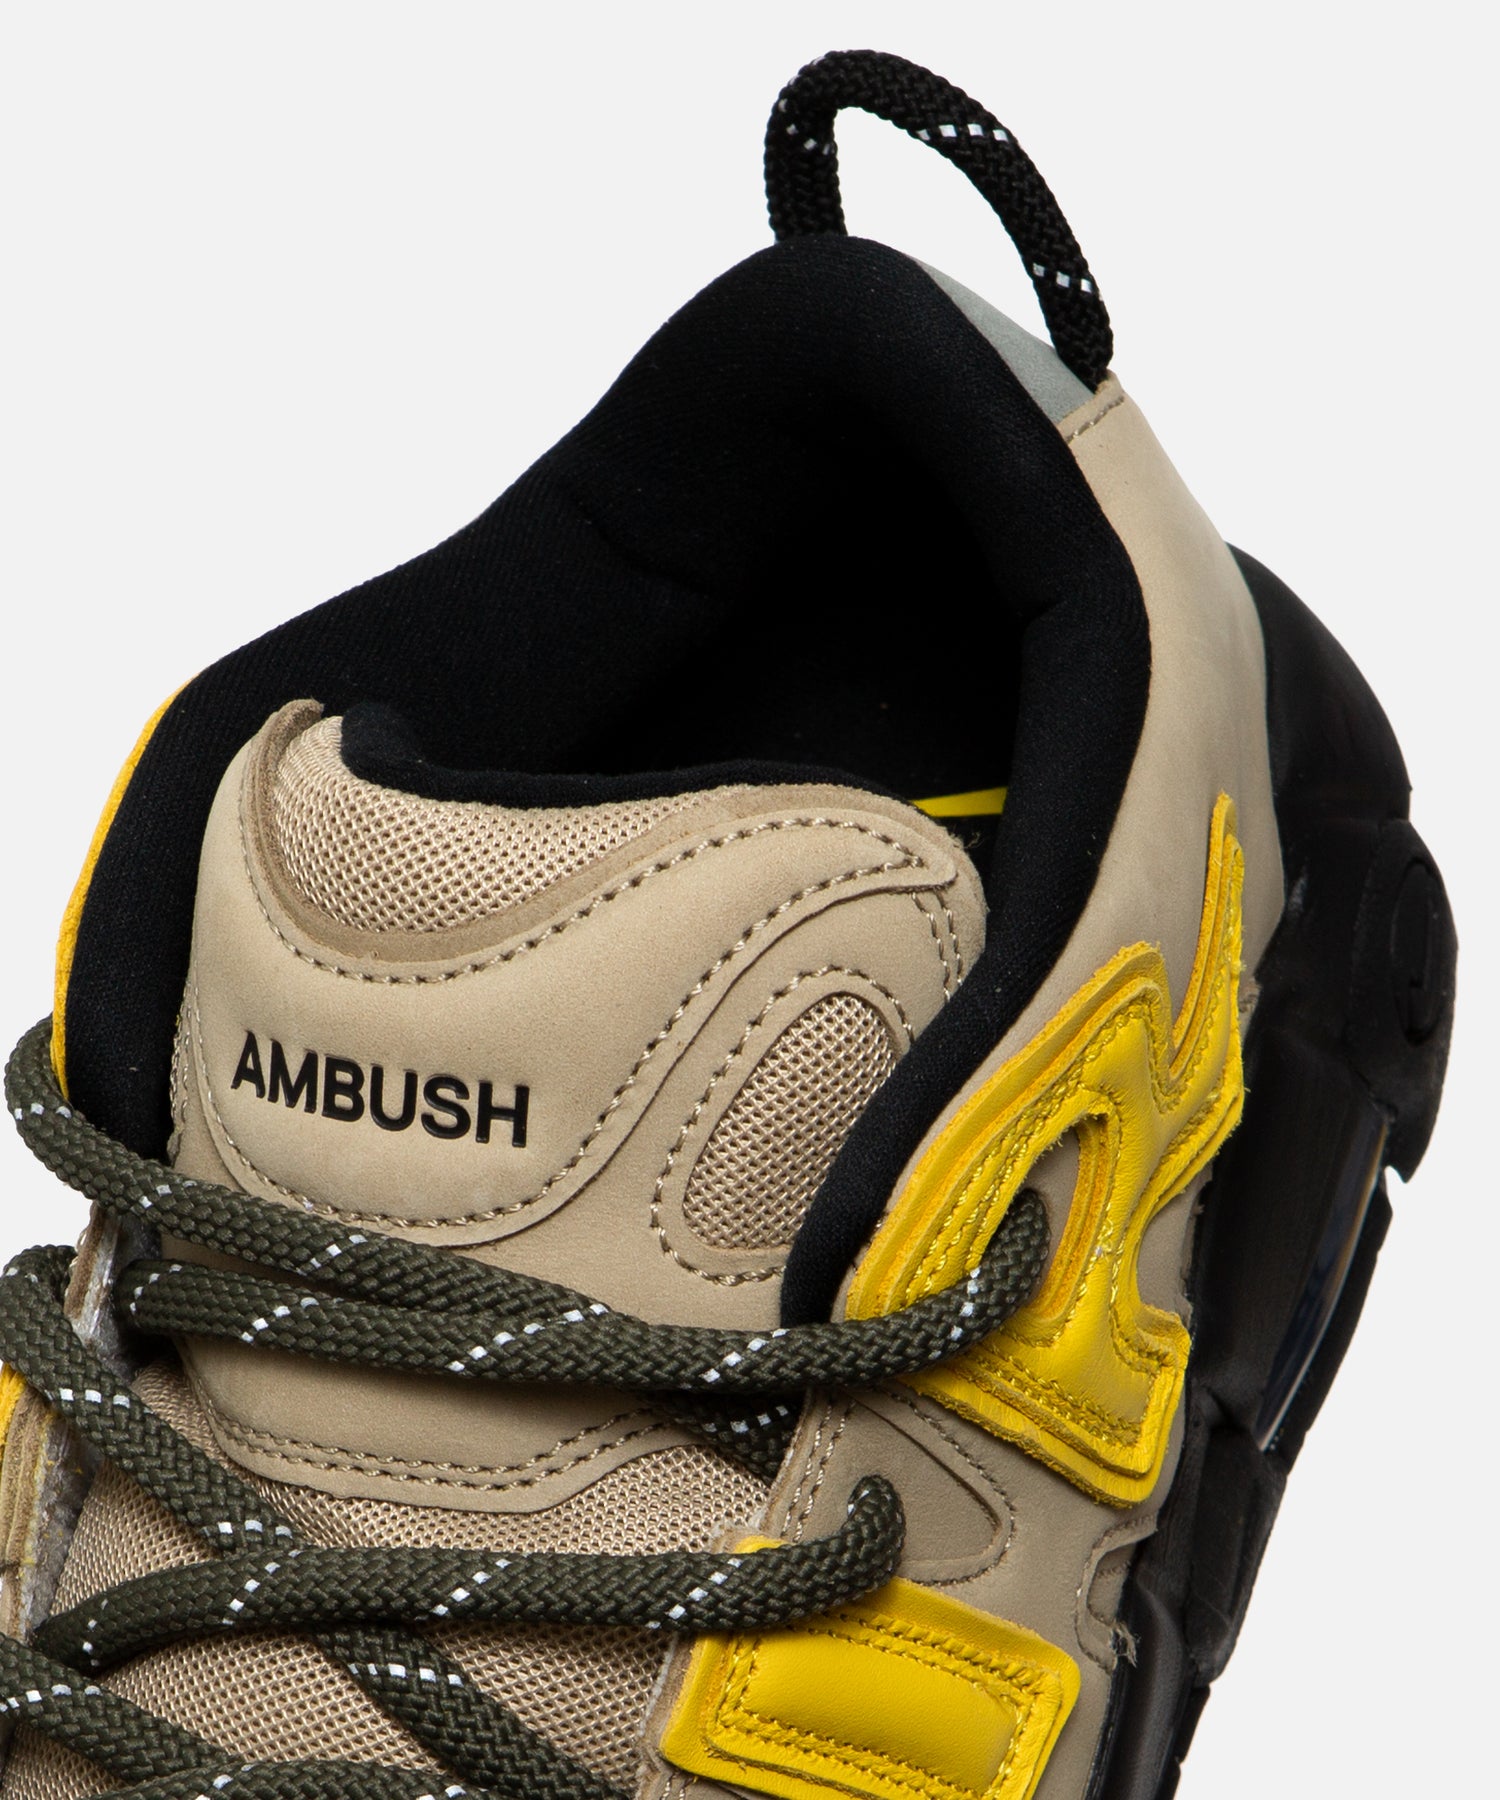 AMBUSH x Nike Air More Uptempo Low SP (Limestone/Vivid Sulfur-Black-Flat Pewter)